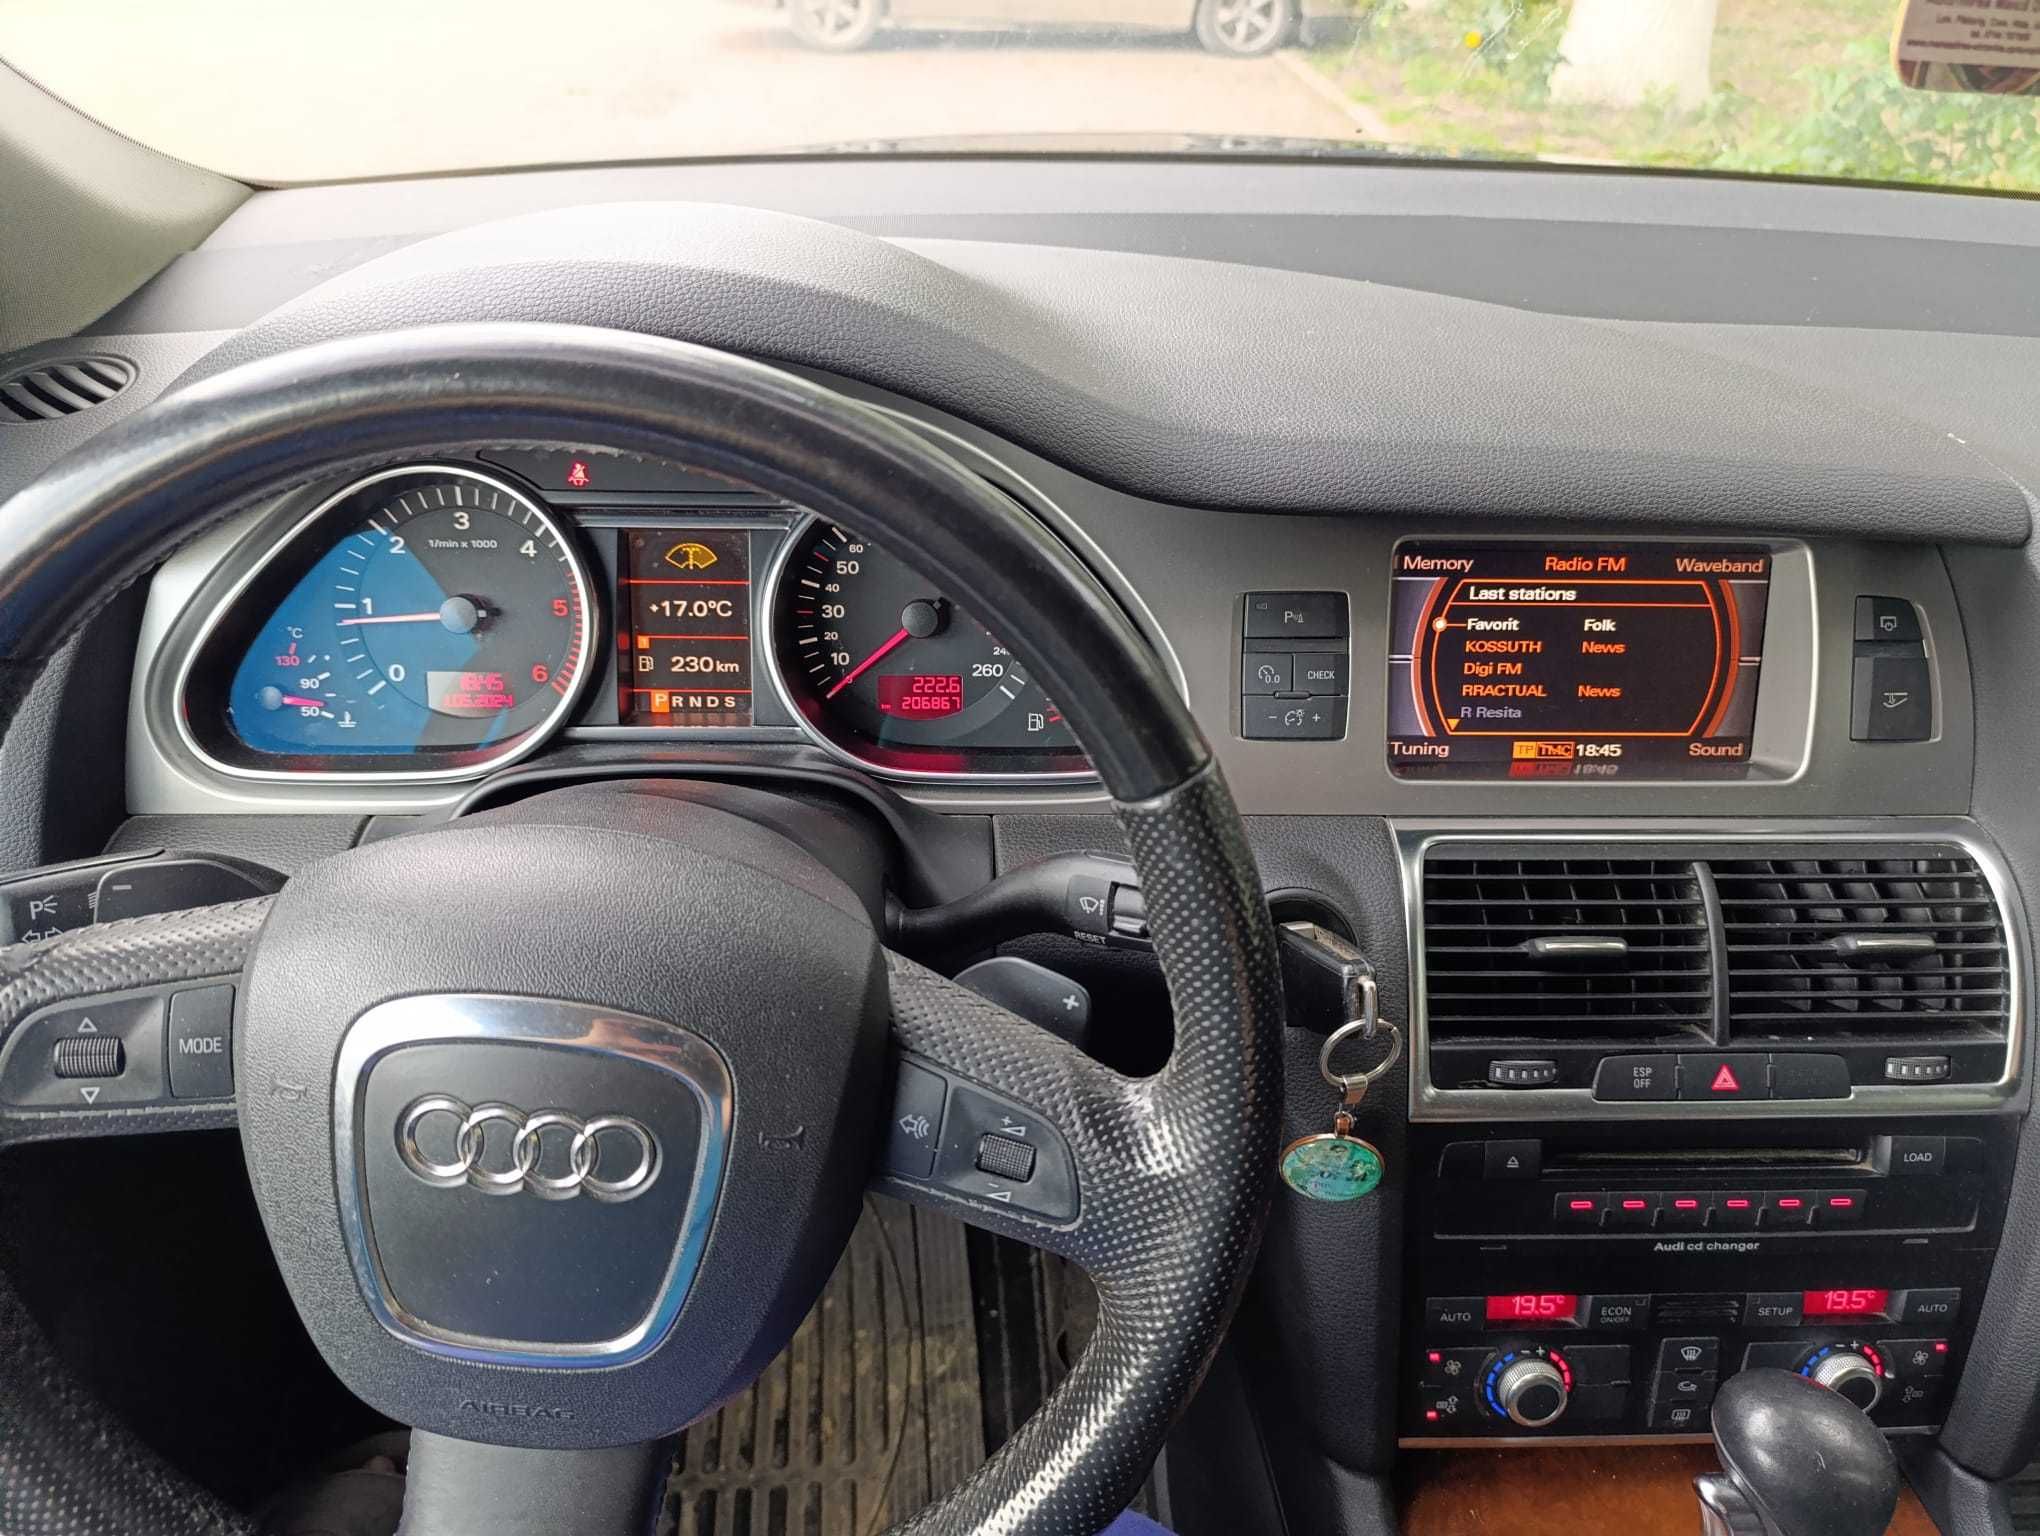 Vând Audi Q 7, înmatriculat,persoana fizica,